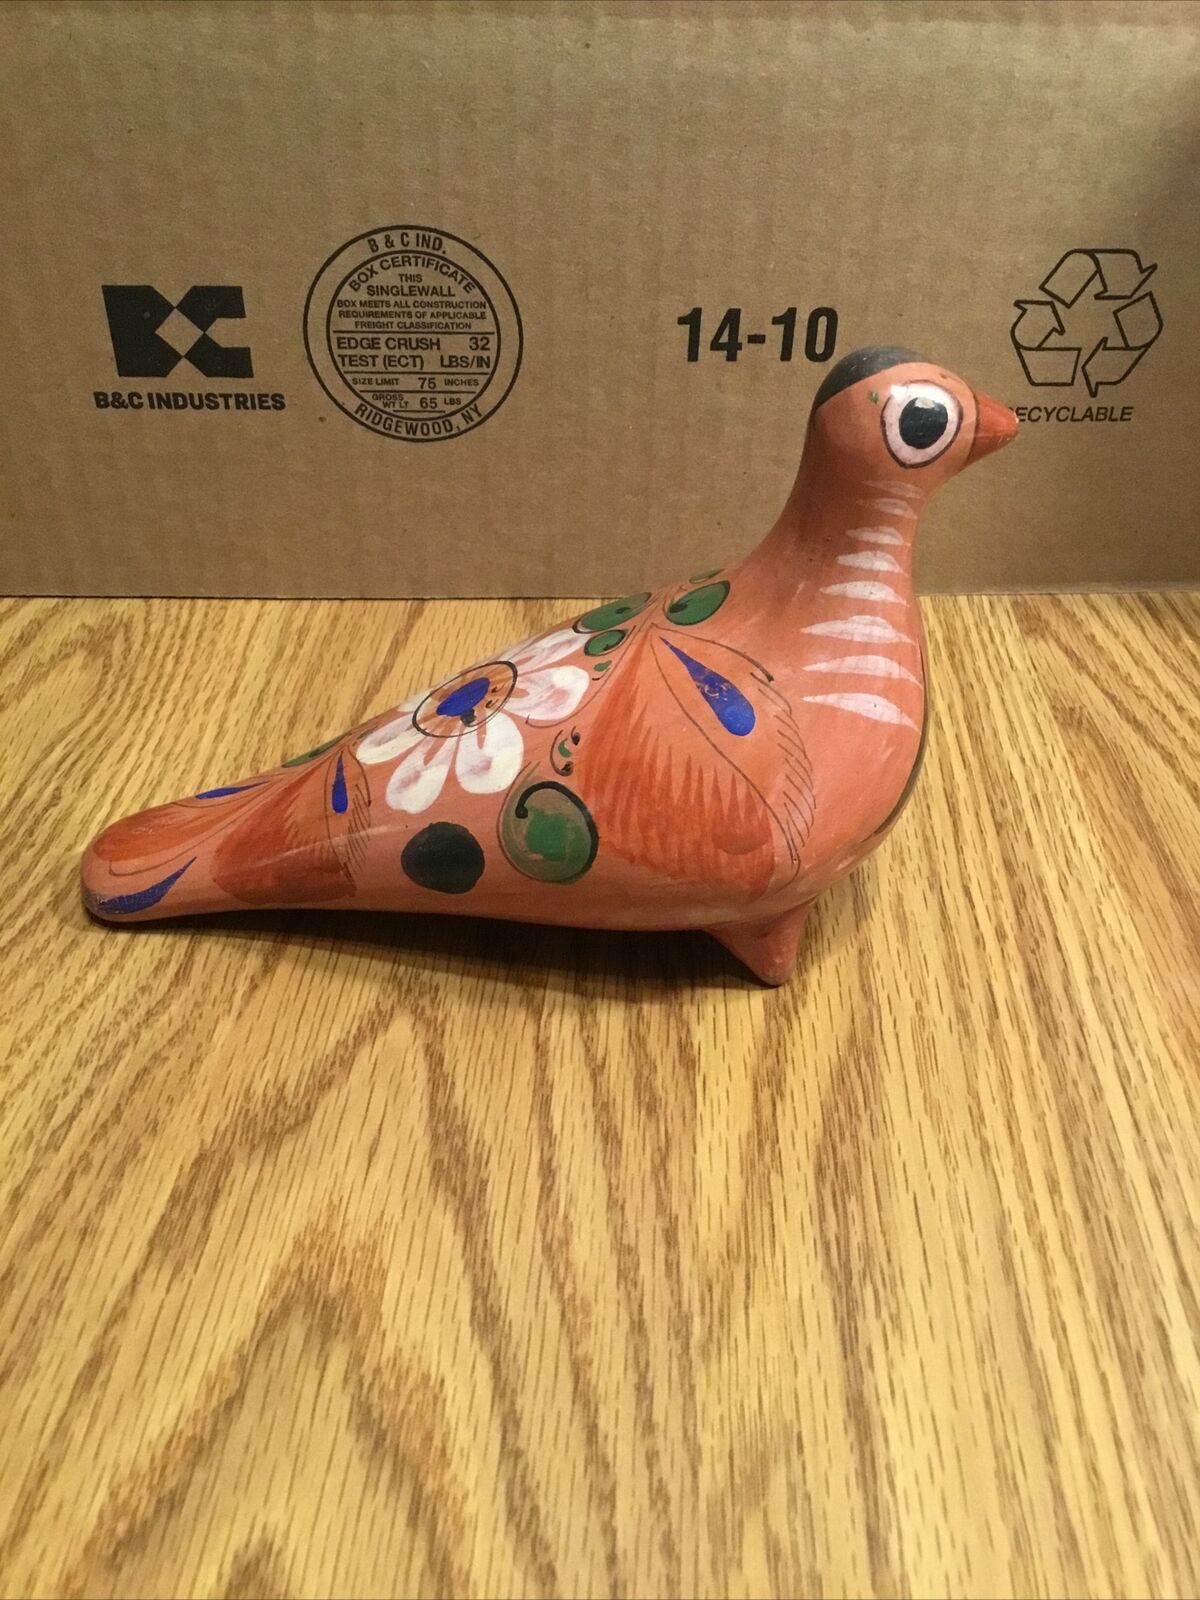 Tonala Mexican Pottery Folk Art Bird Figurine Hand Painted Vintage Pigeon Dove